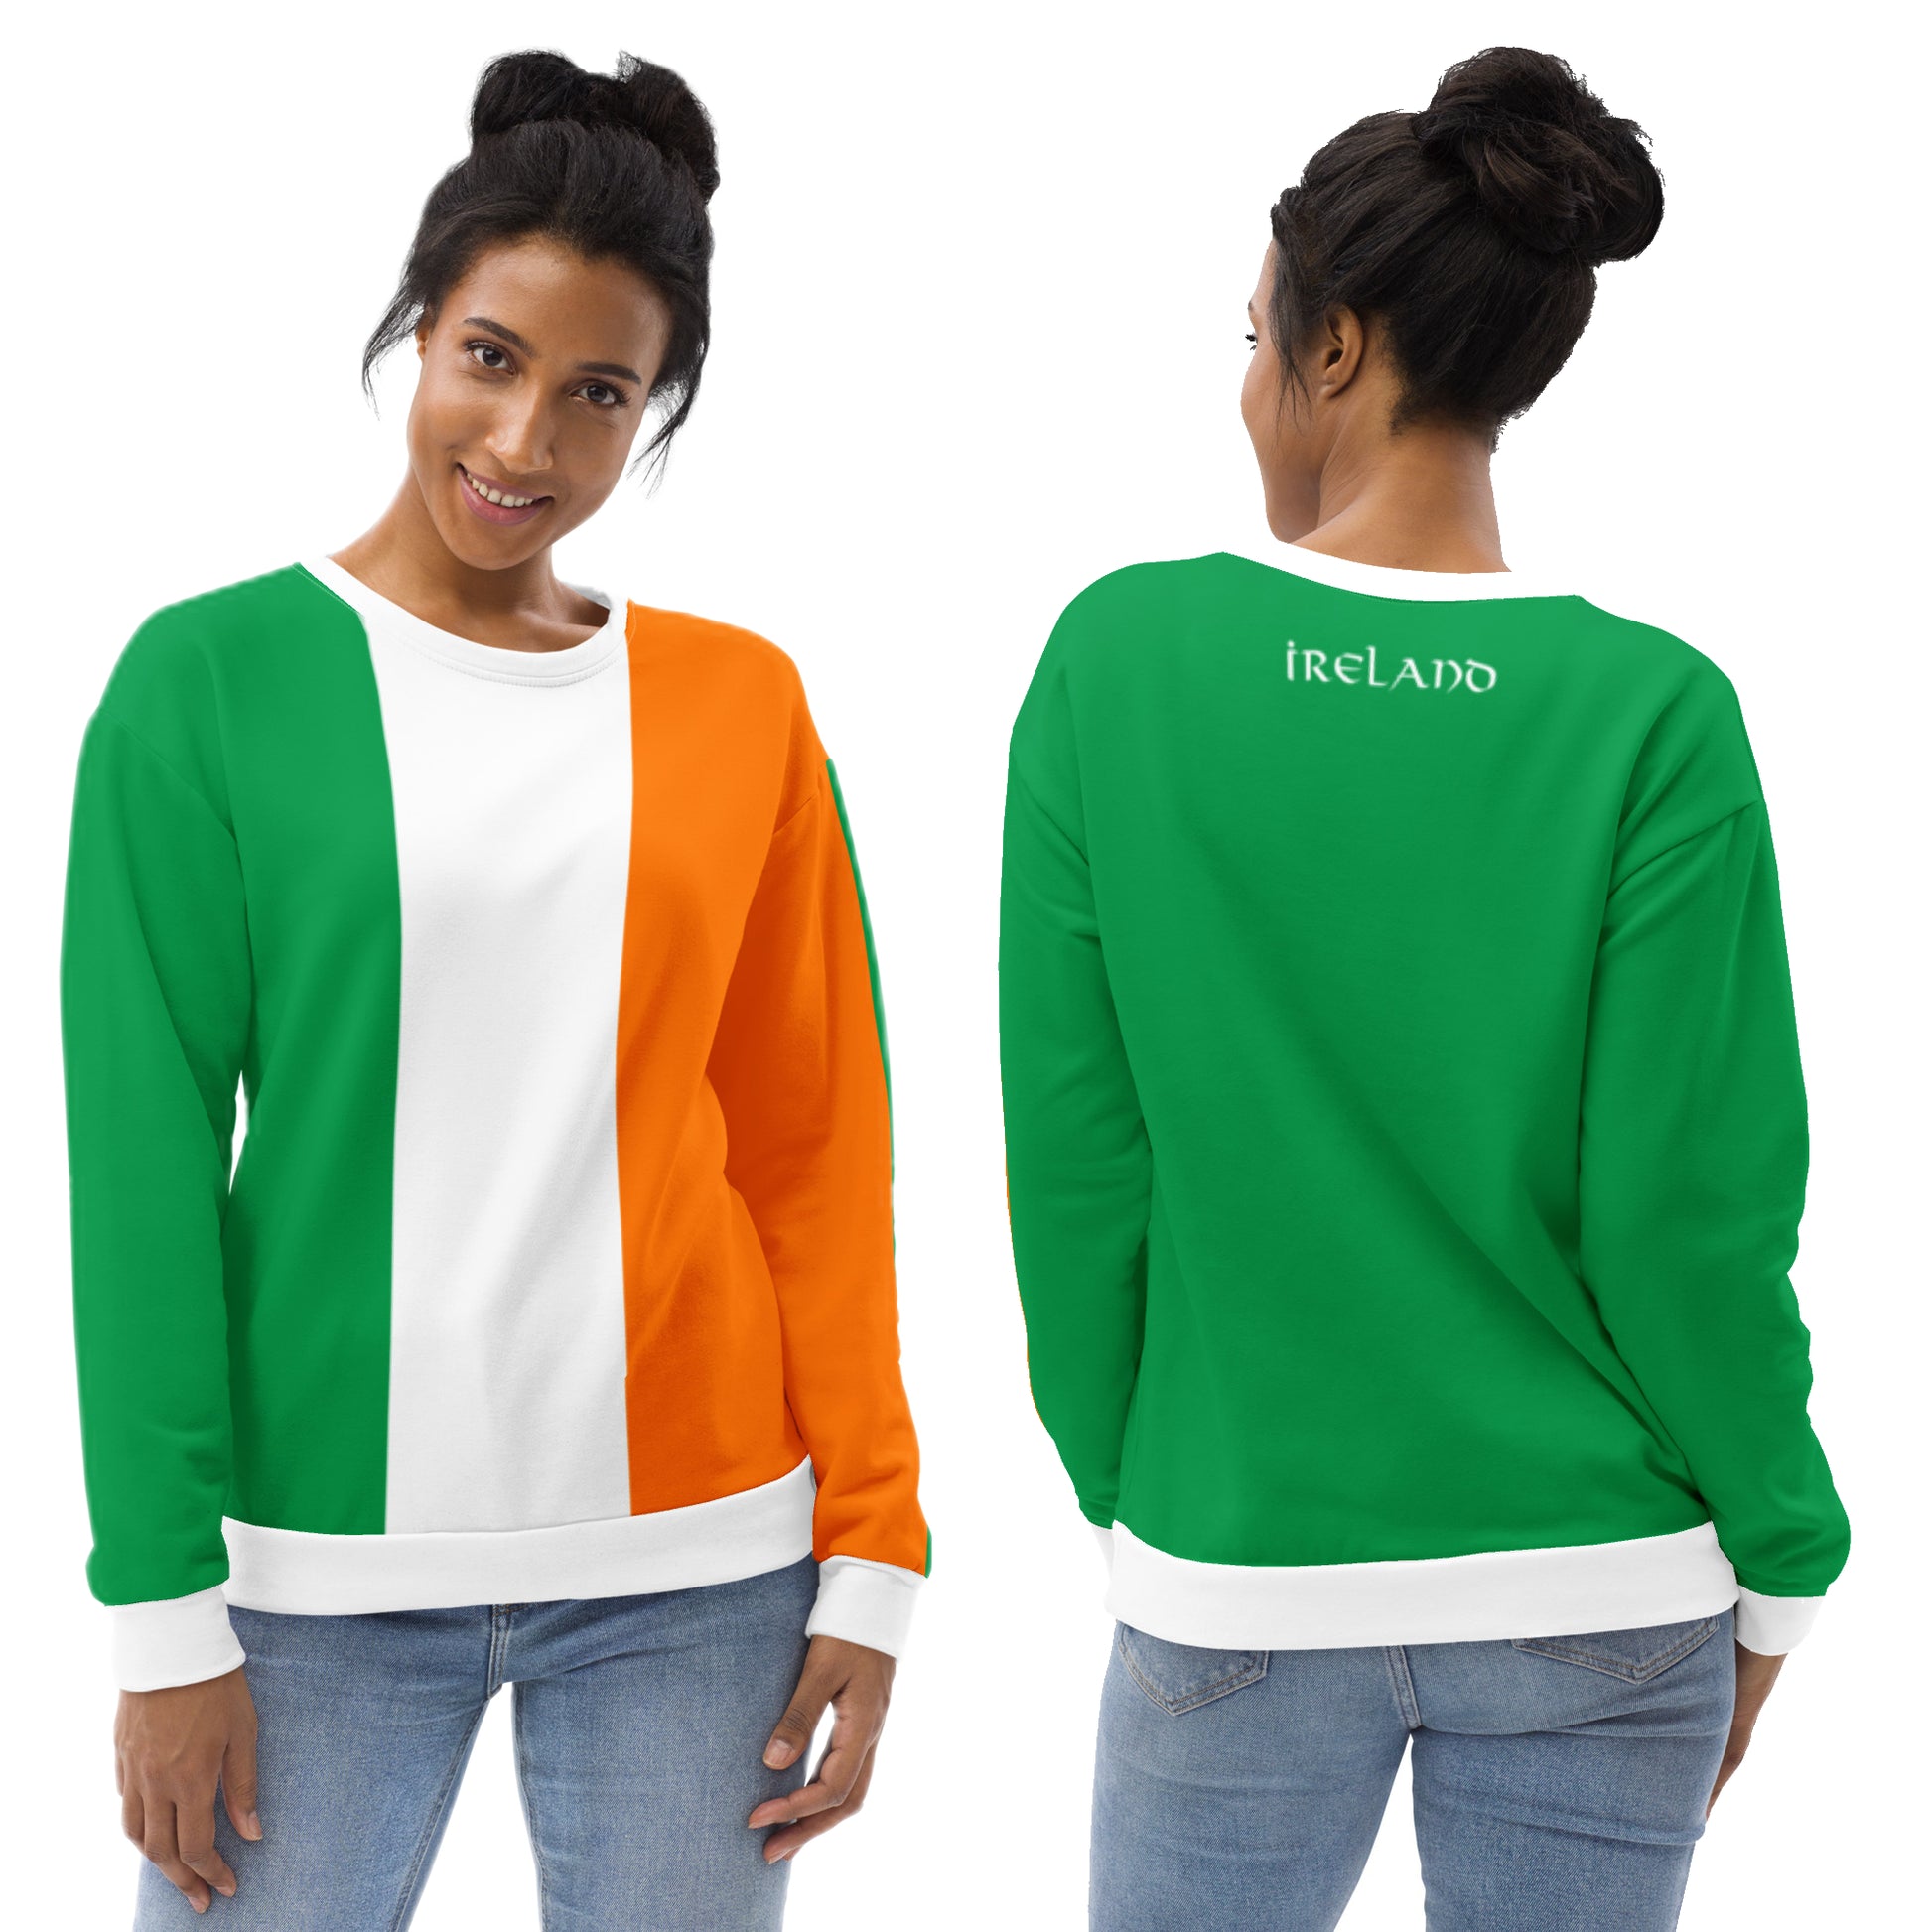 Irish Sweatshirt With Print Of Ireland's Flag Colors